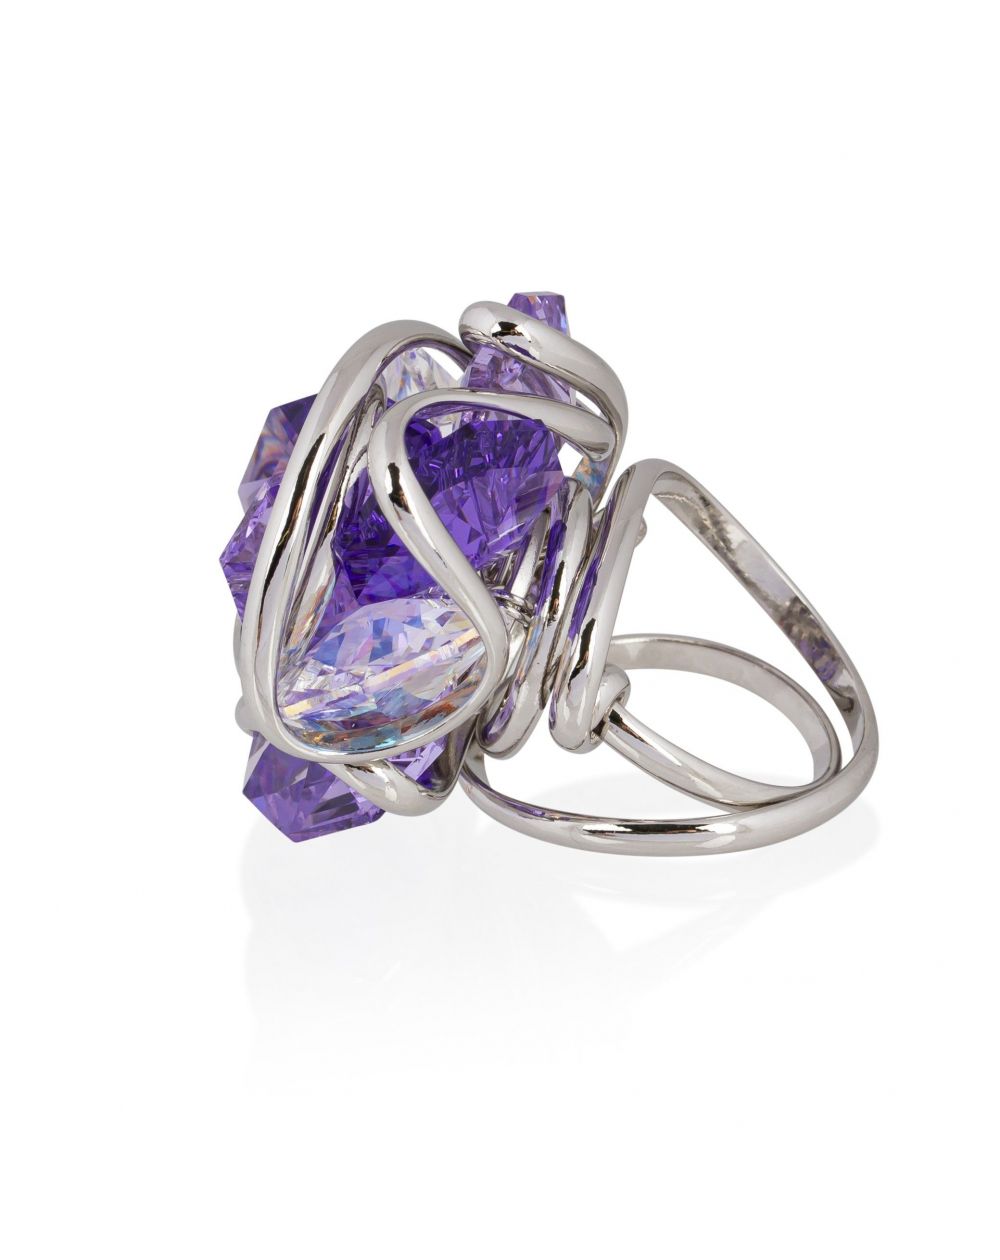 Andrea Marazzini - Bague cristal Swarovski  Flower F14 Violet